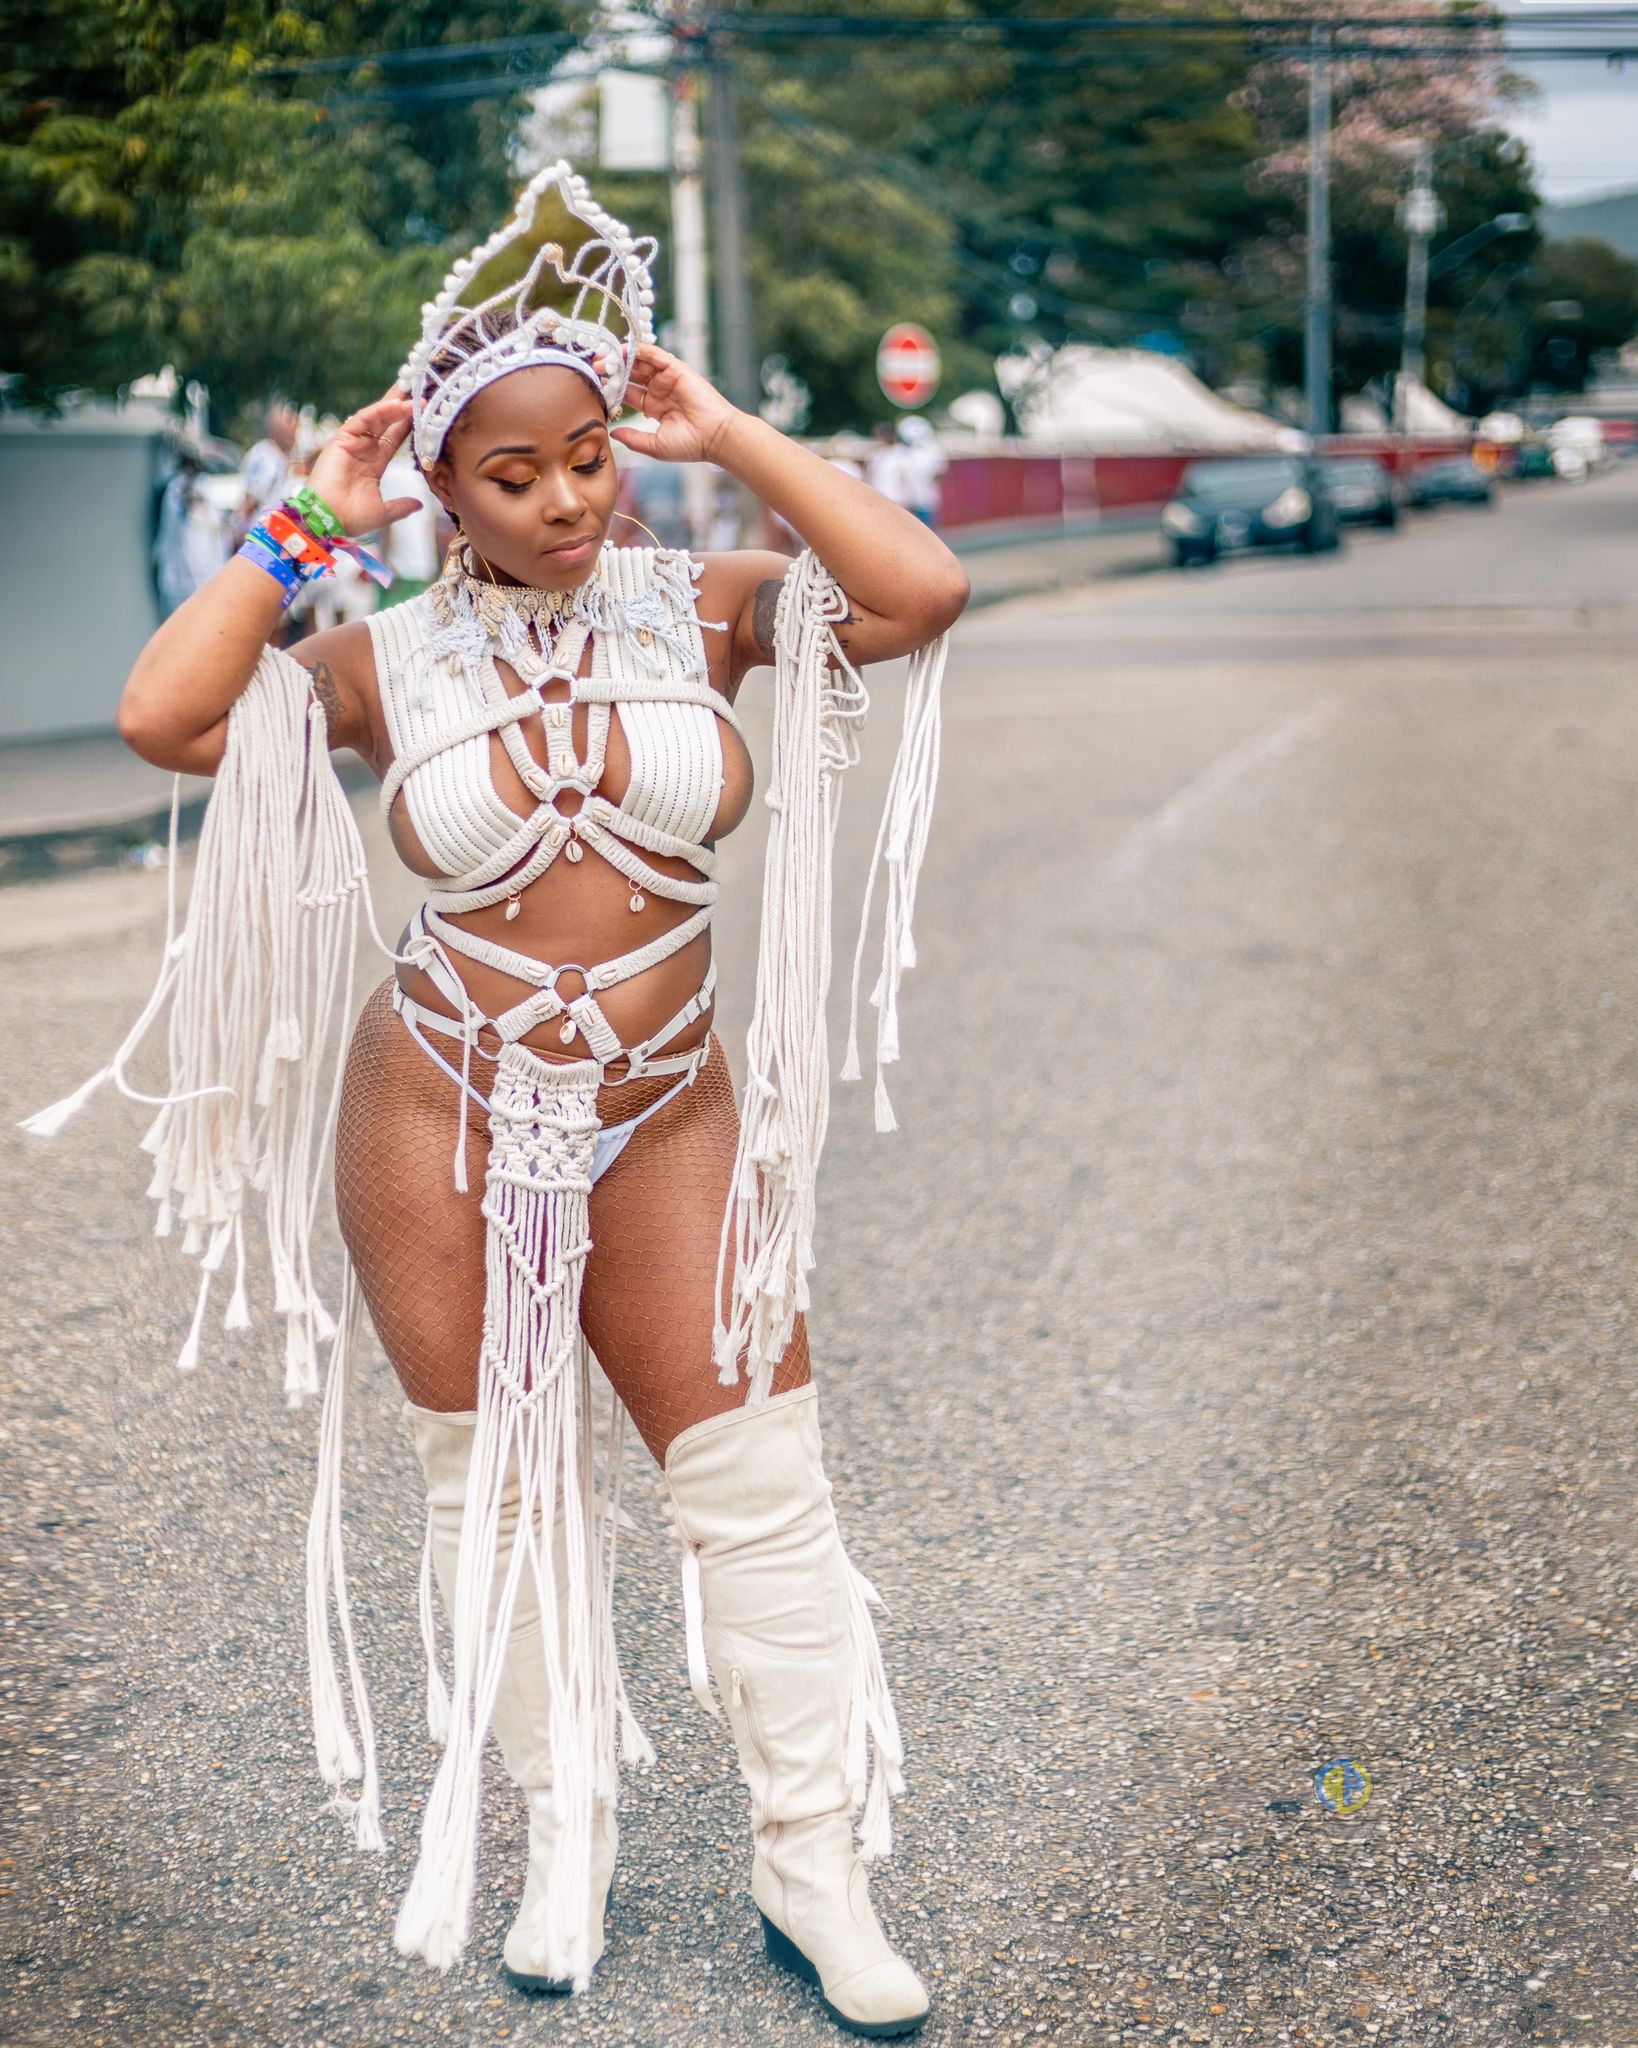 Carnival costumes: Hiring a designer.